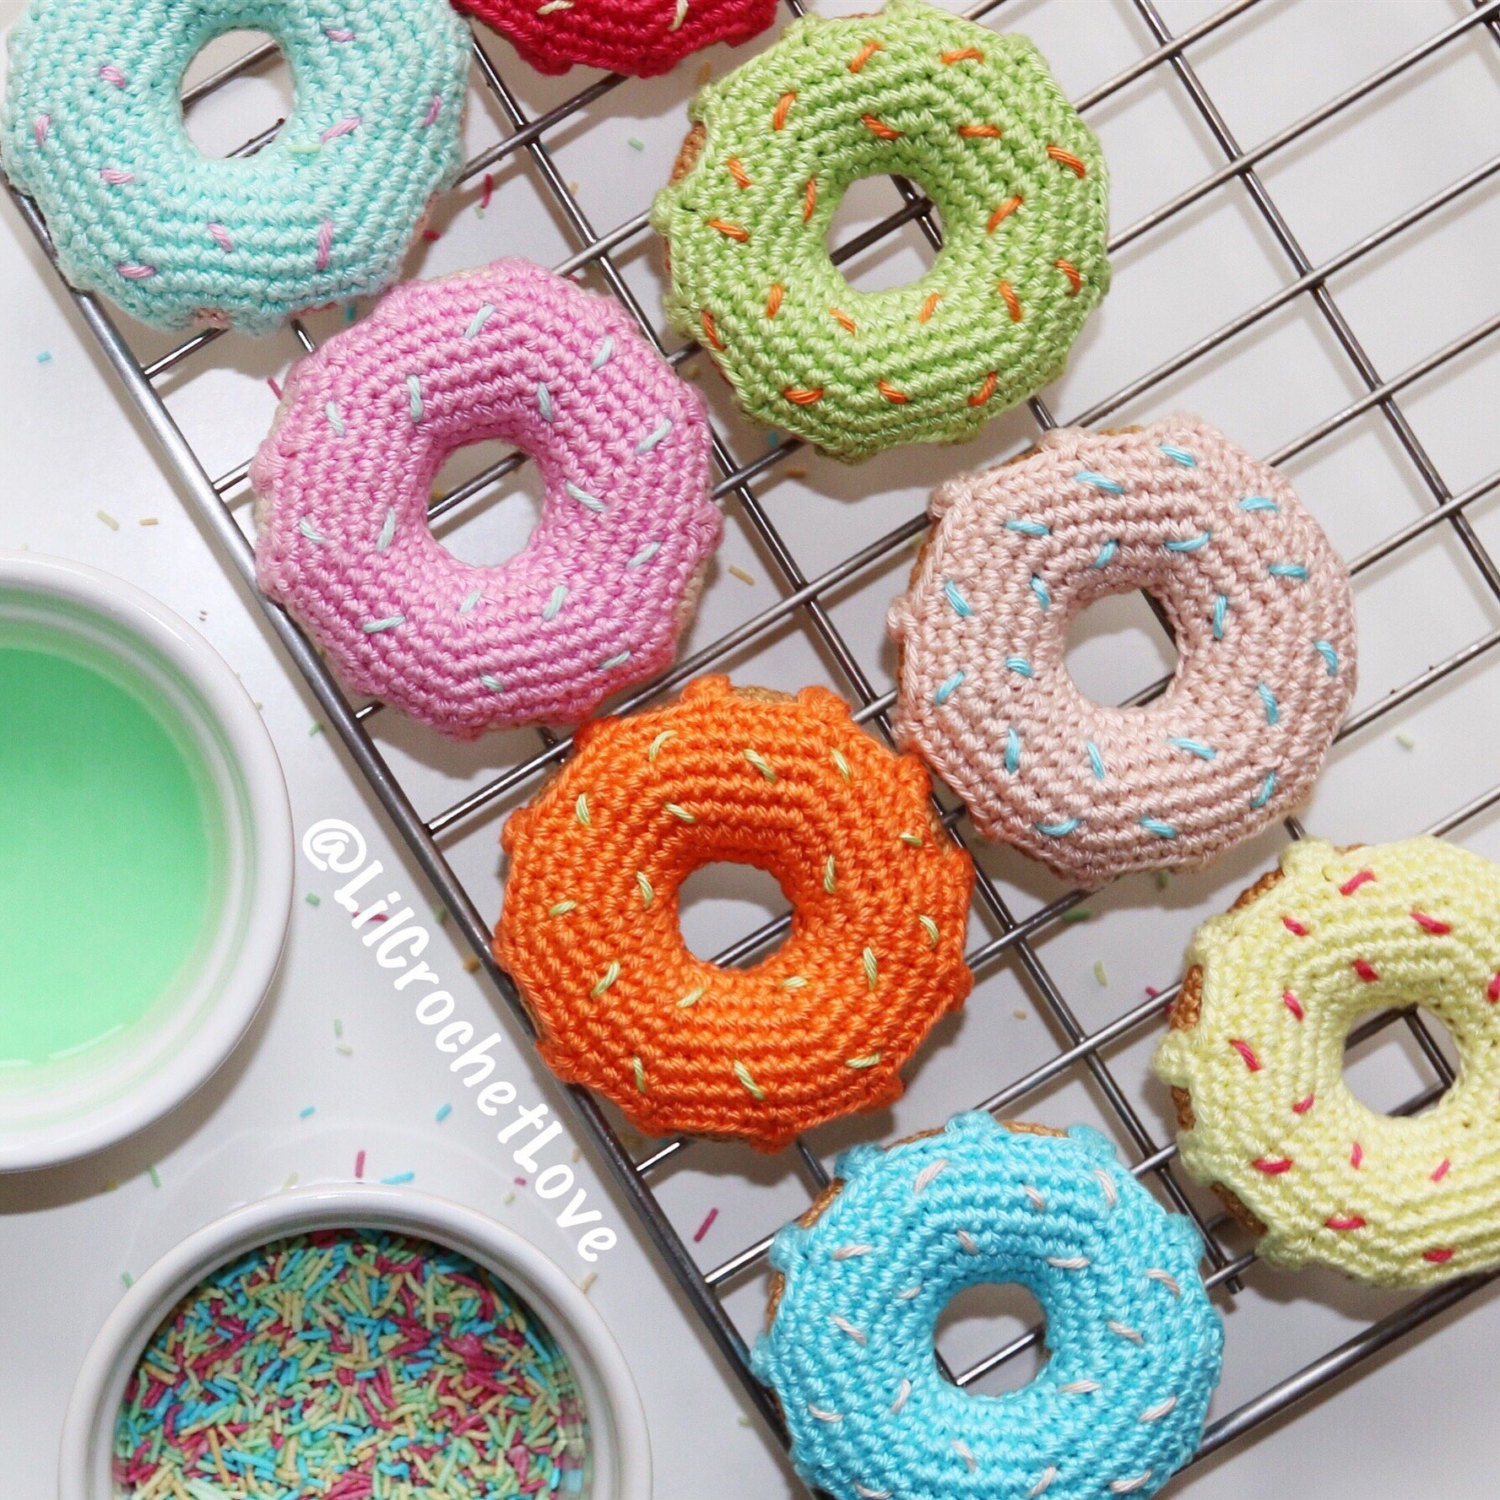 Crochet Donut/ Amigurumi Donut/ Pretend Play/ Play Food/